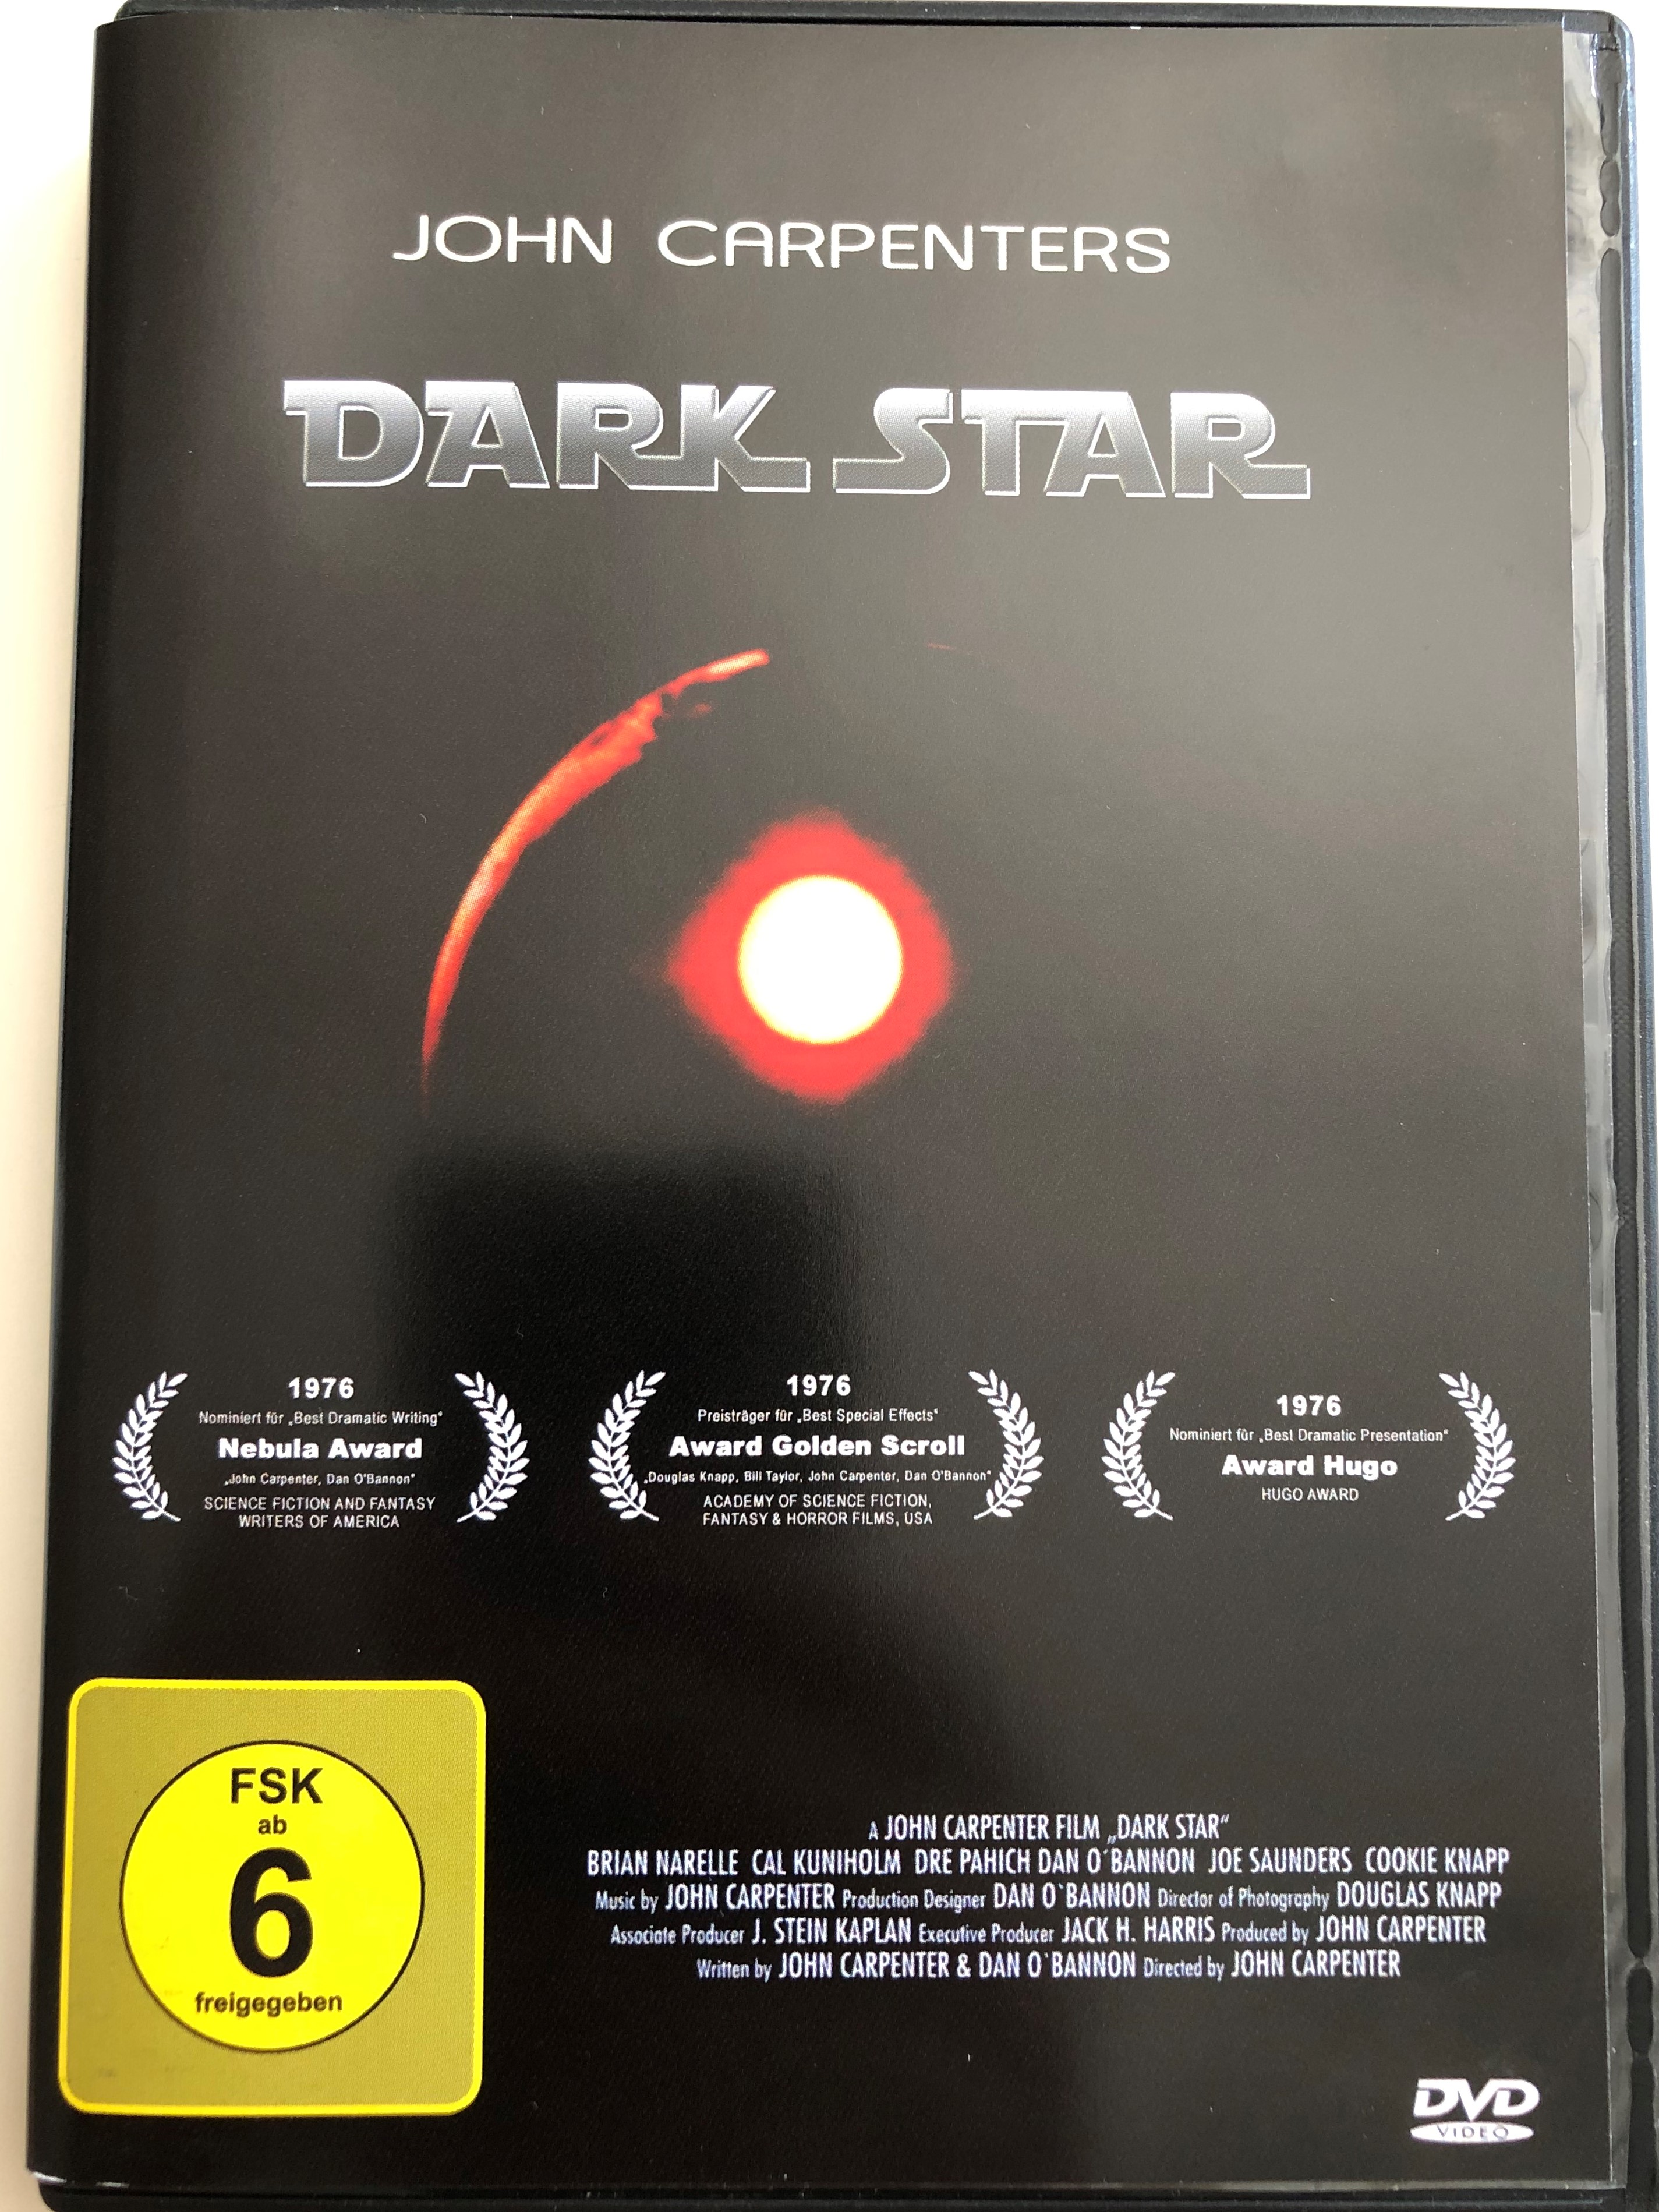 dark-star-1974-directed-by-john-carpenter-starring-dan-o-bannon-brian-narelle-cal-kuniholm-dre-pahich-1-.jpg